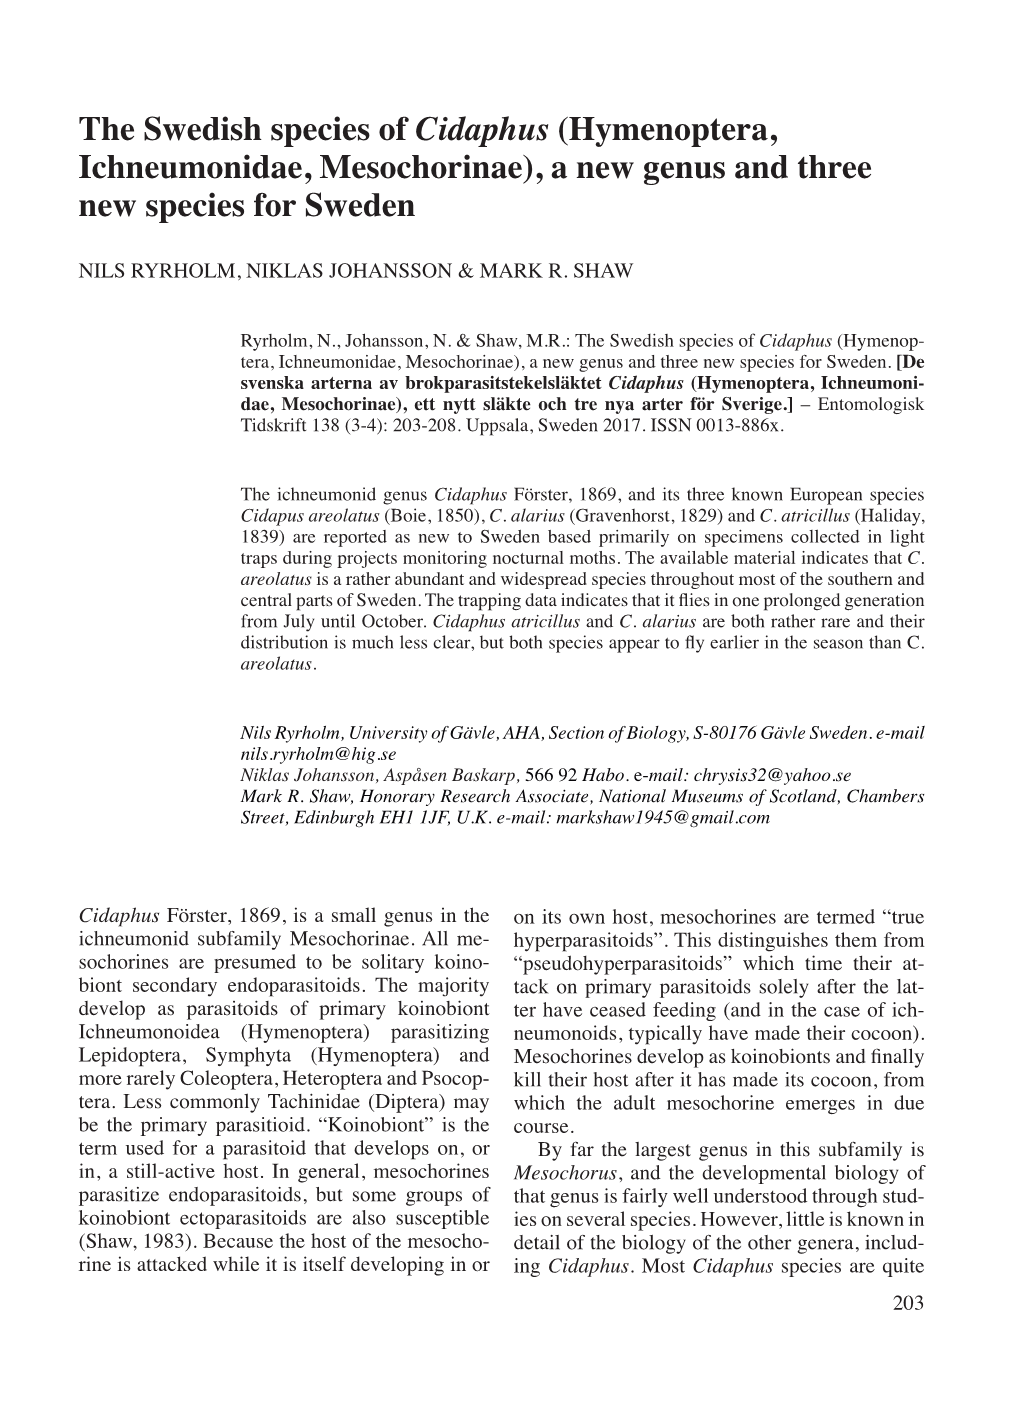 The Swedish Species of Cidaphus (Hymenoptera, Ichneumonidae, Mesochorinae), a New Genus and Three New Species for Sweden